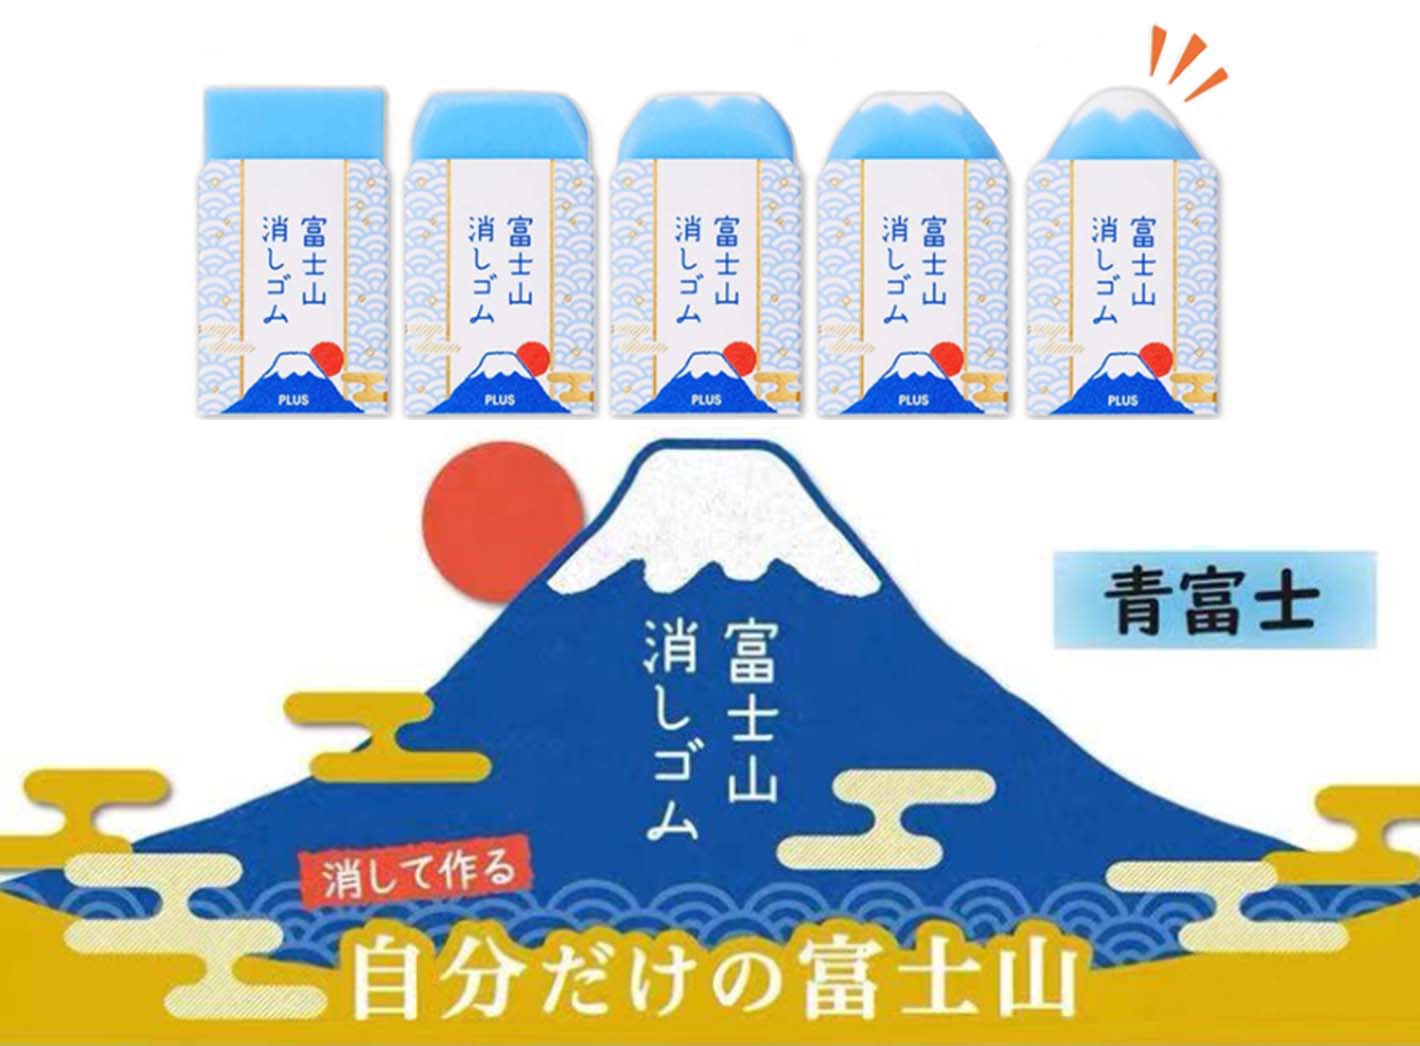 Plus Mount Fuji Eraser – Sounds of Love